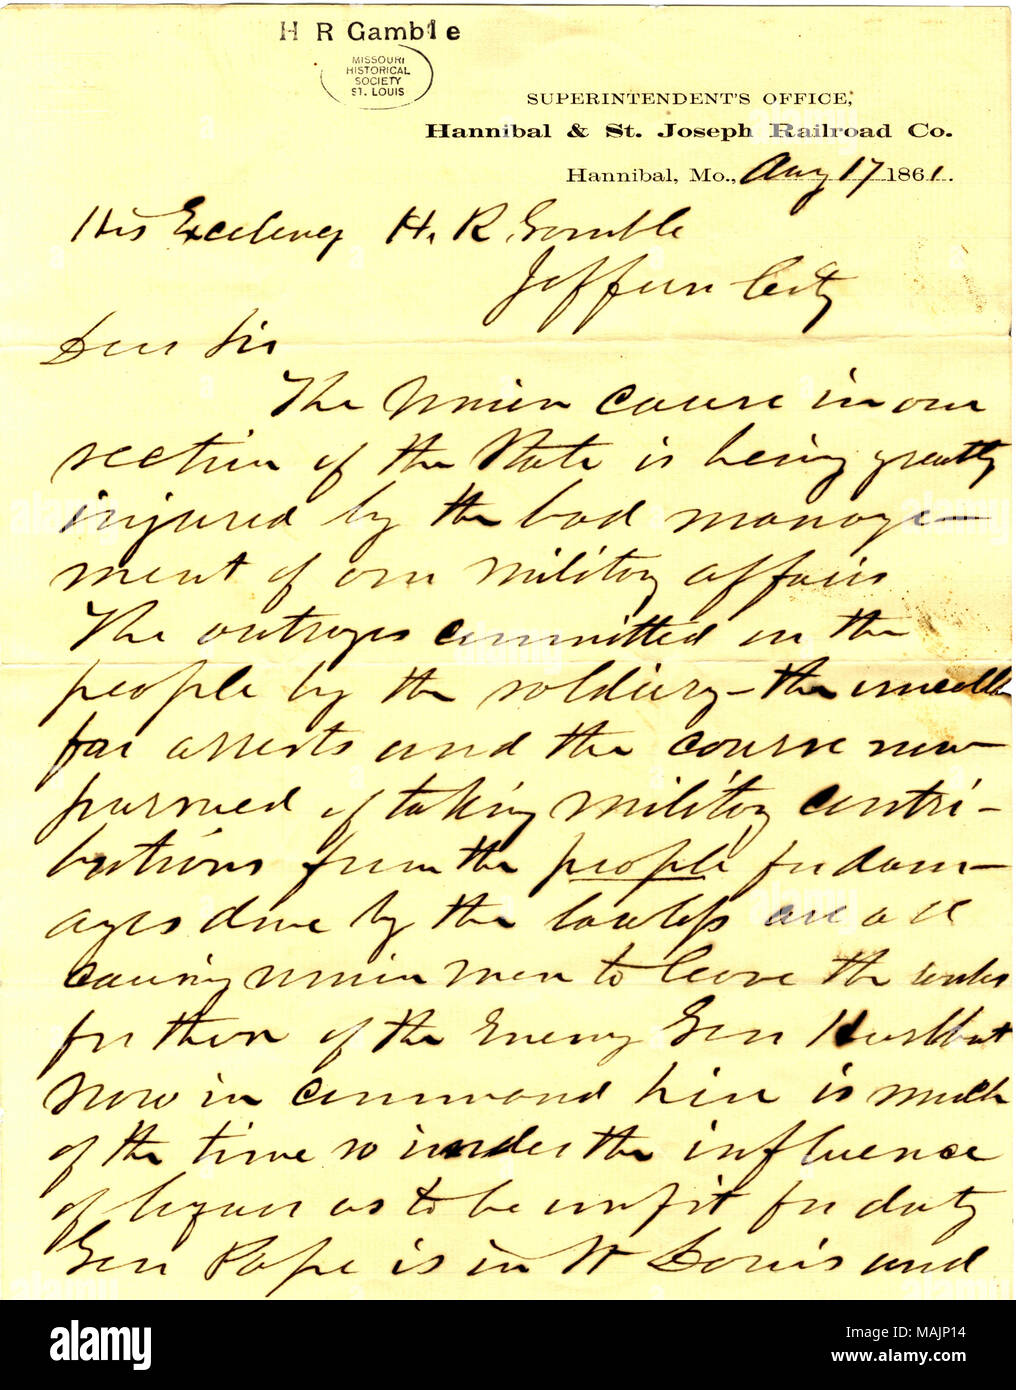 Pide que se sustituya el Gen. Hurlburt como comandante en el norte de Missouri. Título: Carta firmada J.T.K Hayward, Hannibal & St. Joseph Railroad Co., Hannibal, Missouri, a H.R. Gamble, Jefferson City, 17 de agosto de 1861 . 17 de agosto de 1861. Hayward, John T. K. Foto de stock